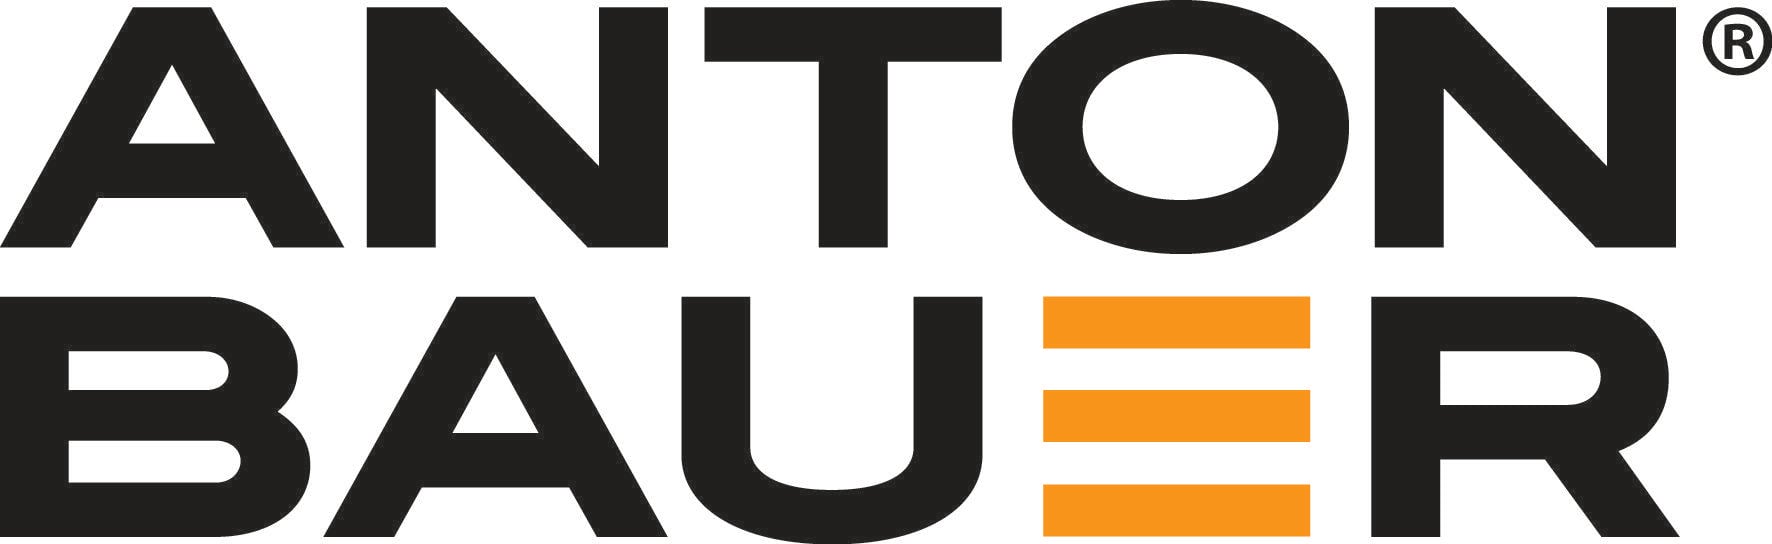 Bauer Logo - Anton Bauer new logo - East Hill Media